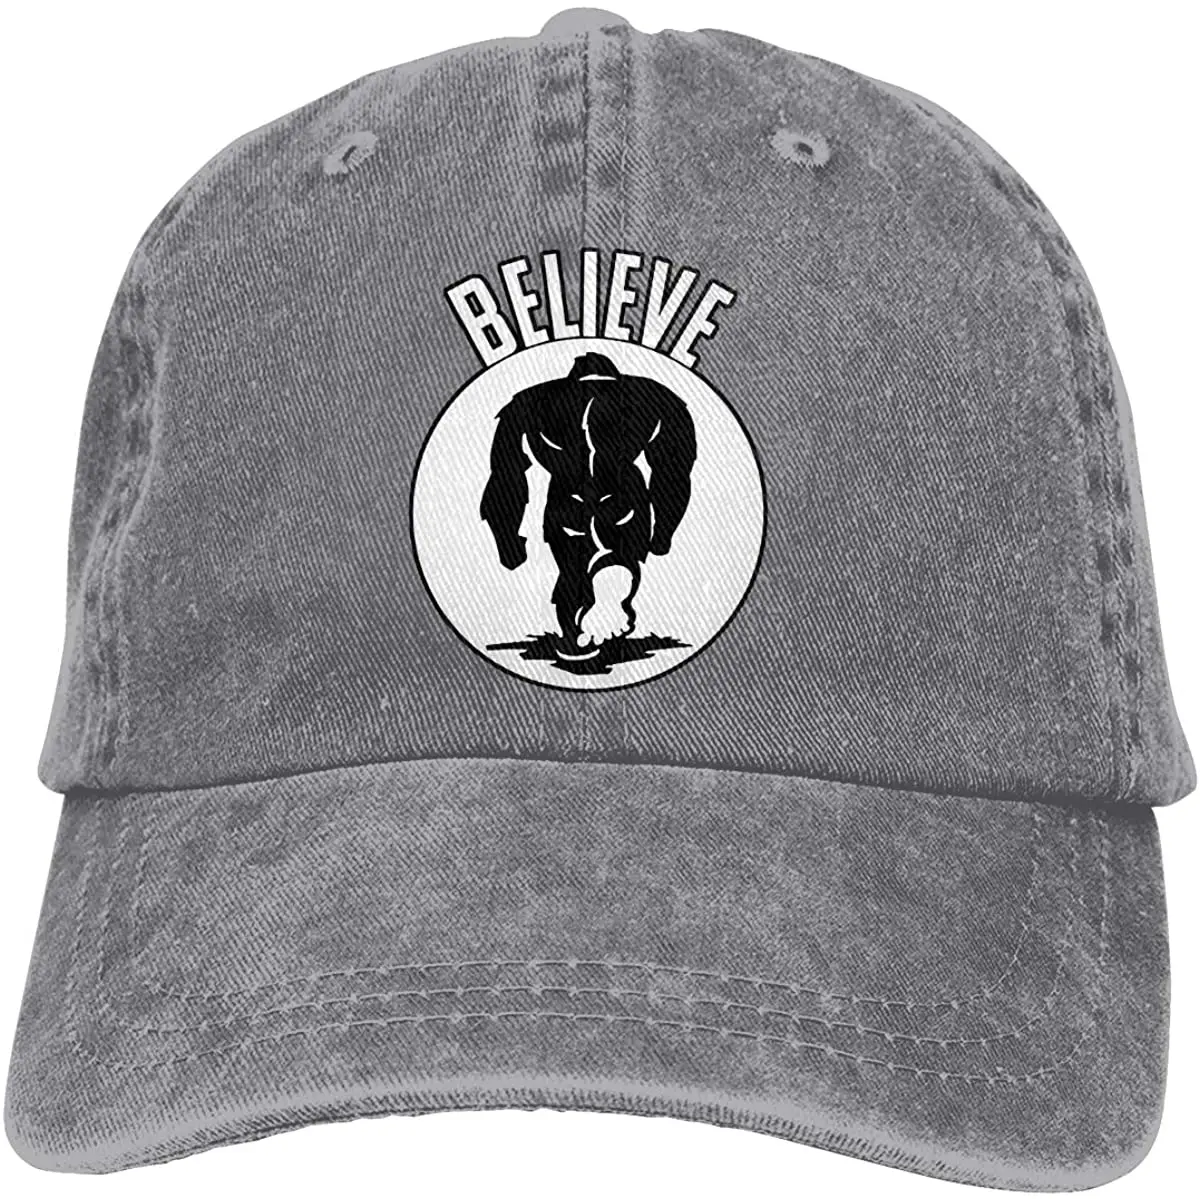 

Vintage Bigfoot Believe Denim Cowboy Peaked Caps,Baseball Trucker/Dad/Golf/Fishing Hats for Mens/Womens